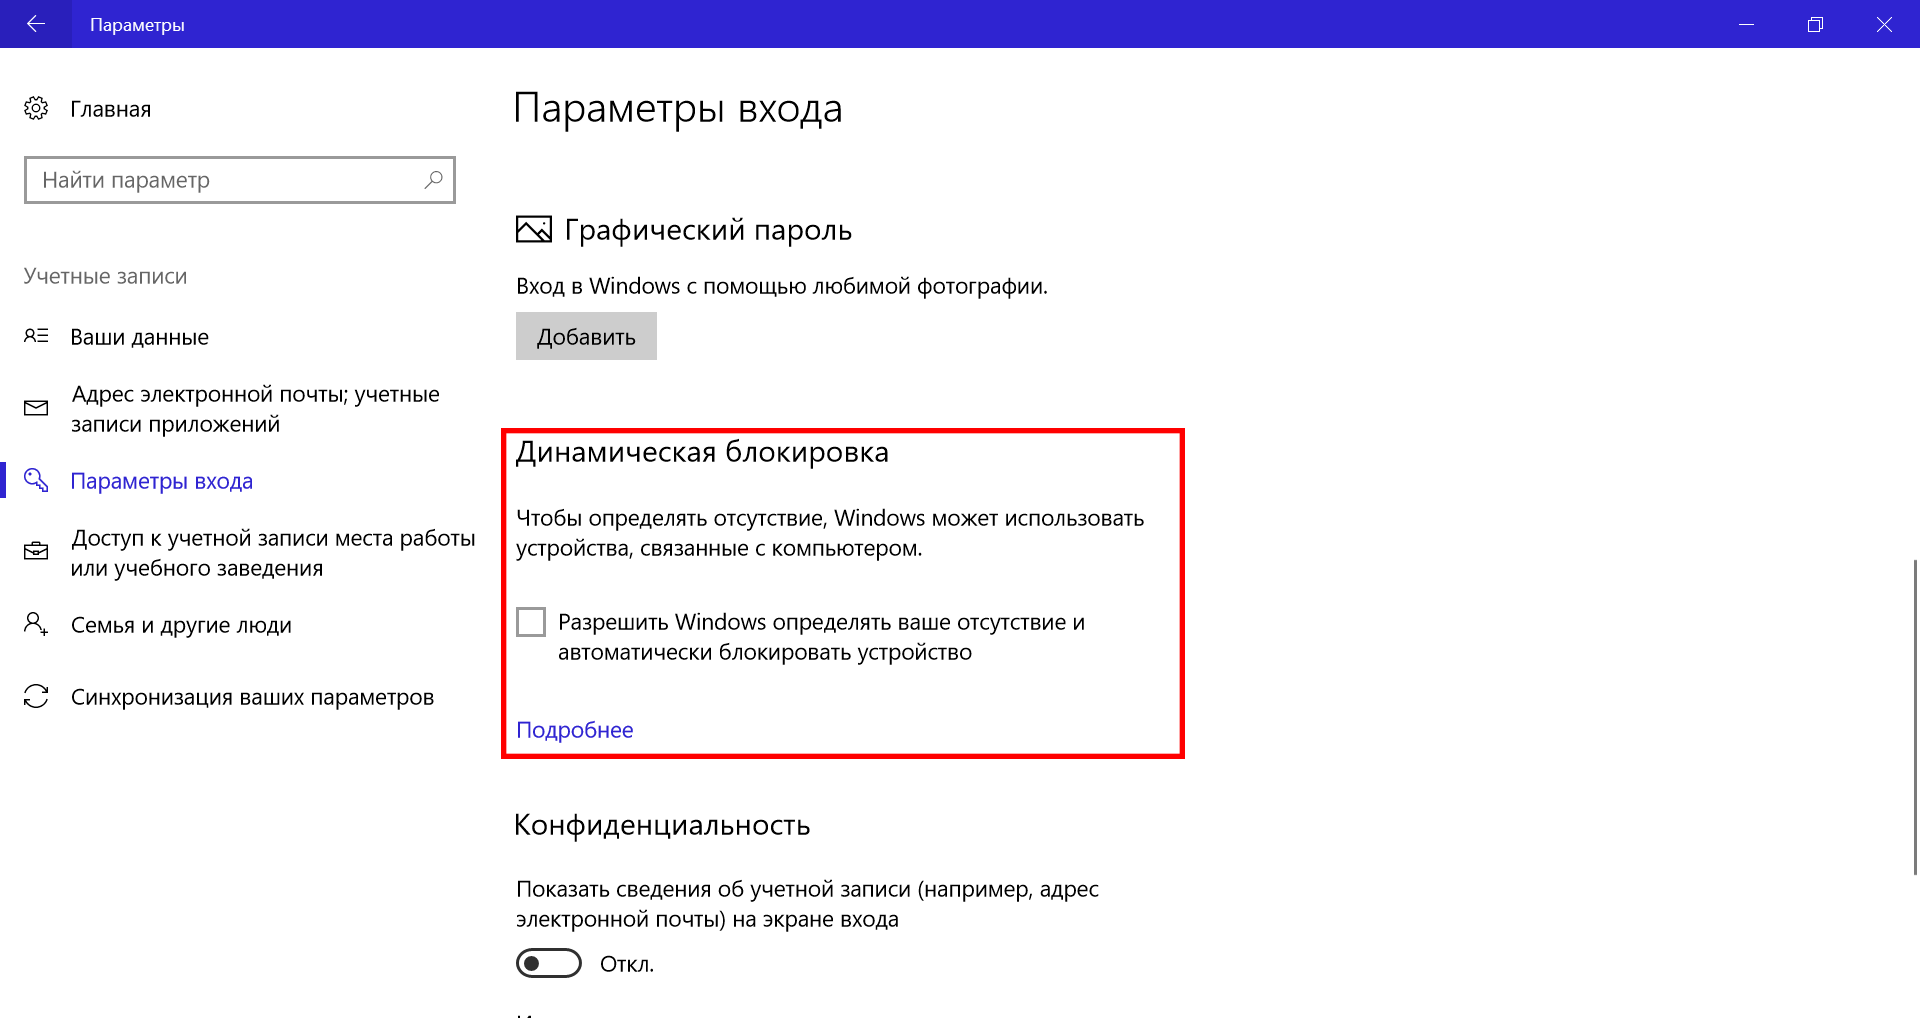 Персонализация windows 10 (быстрые советы). g-ek.com